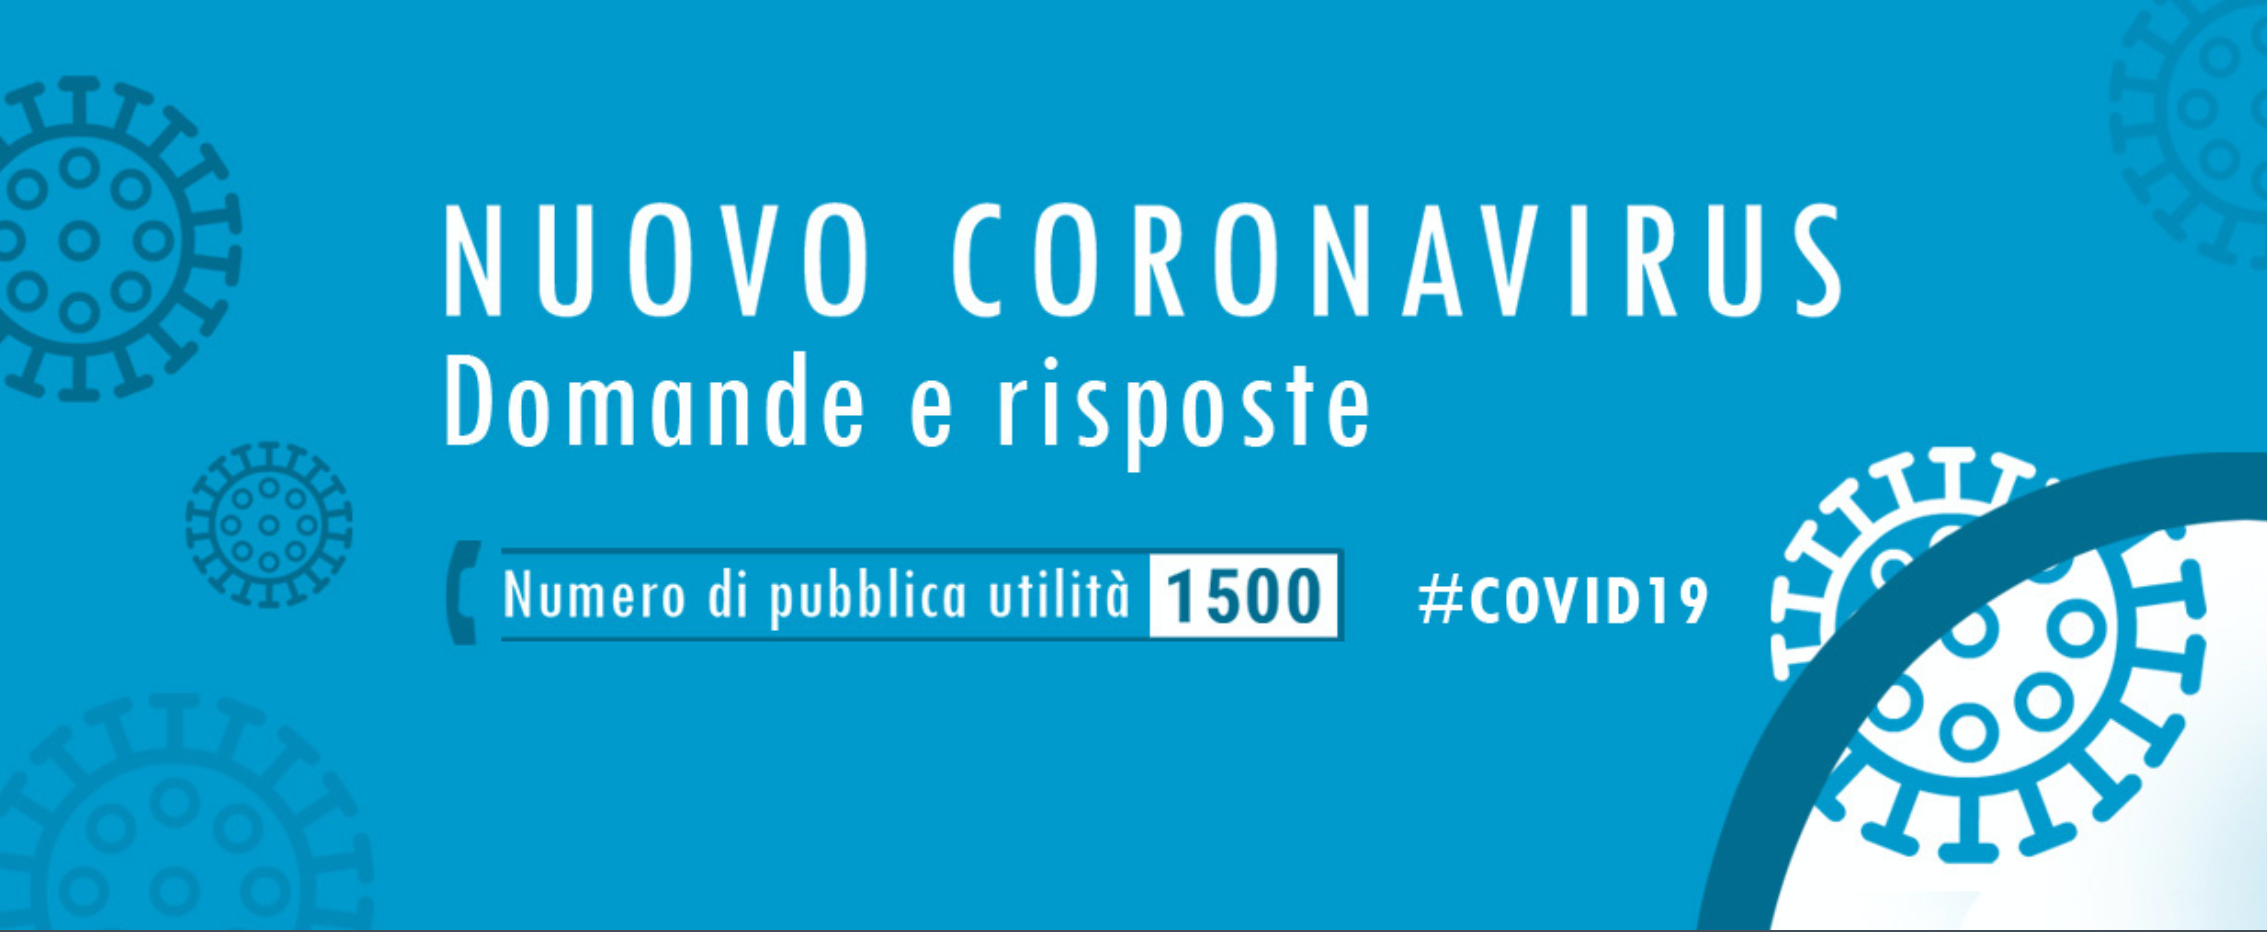 Covid-19 Coronavirus